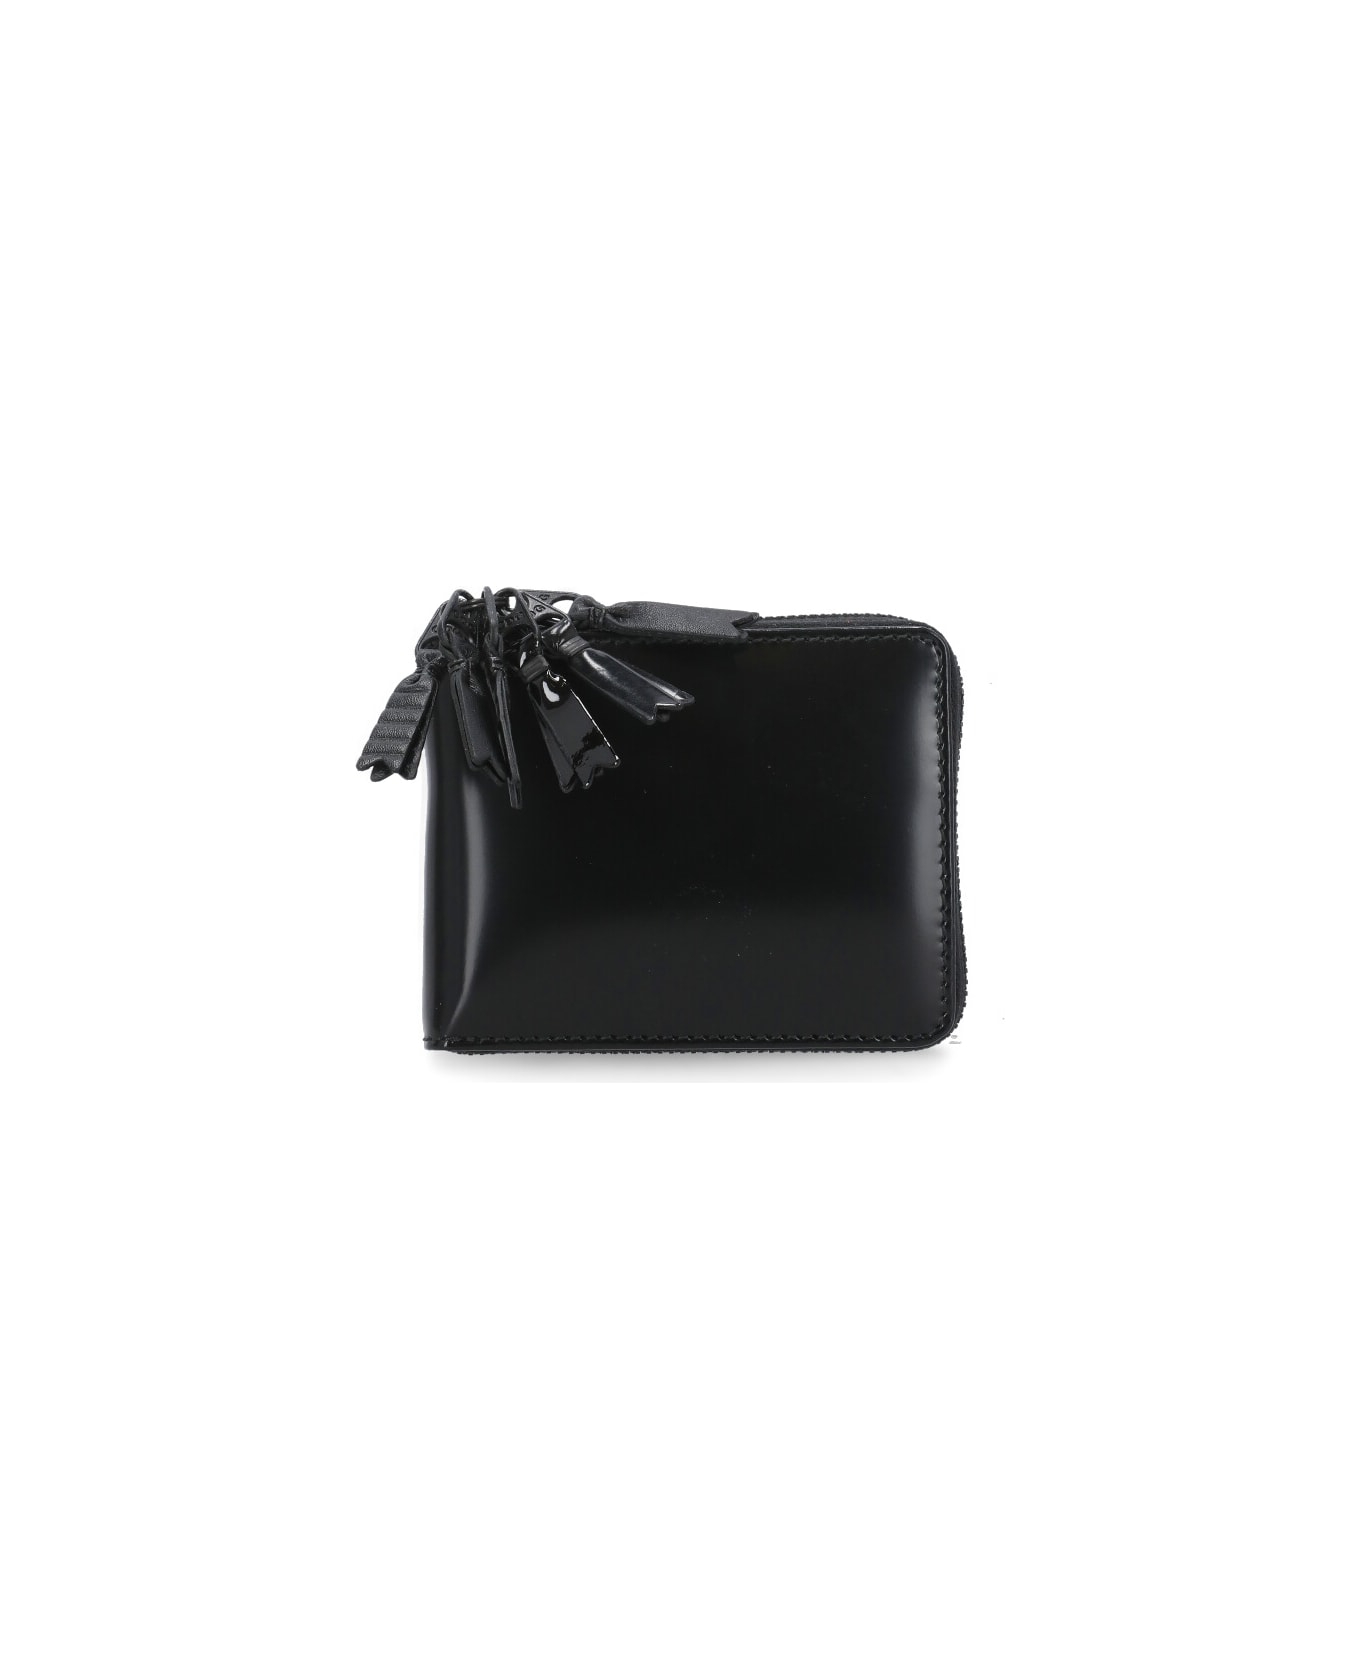 Comme des Garçons Wallet Smooth Leather Wallet - Black 財布